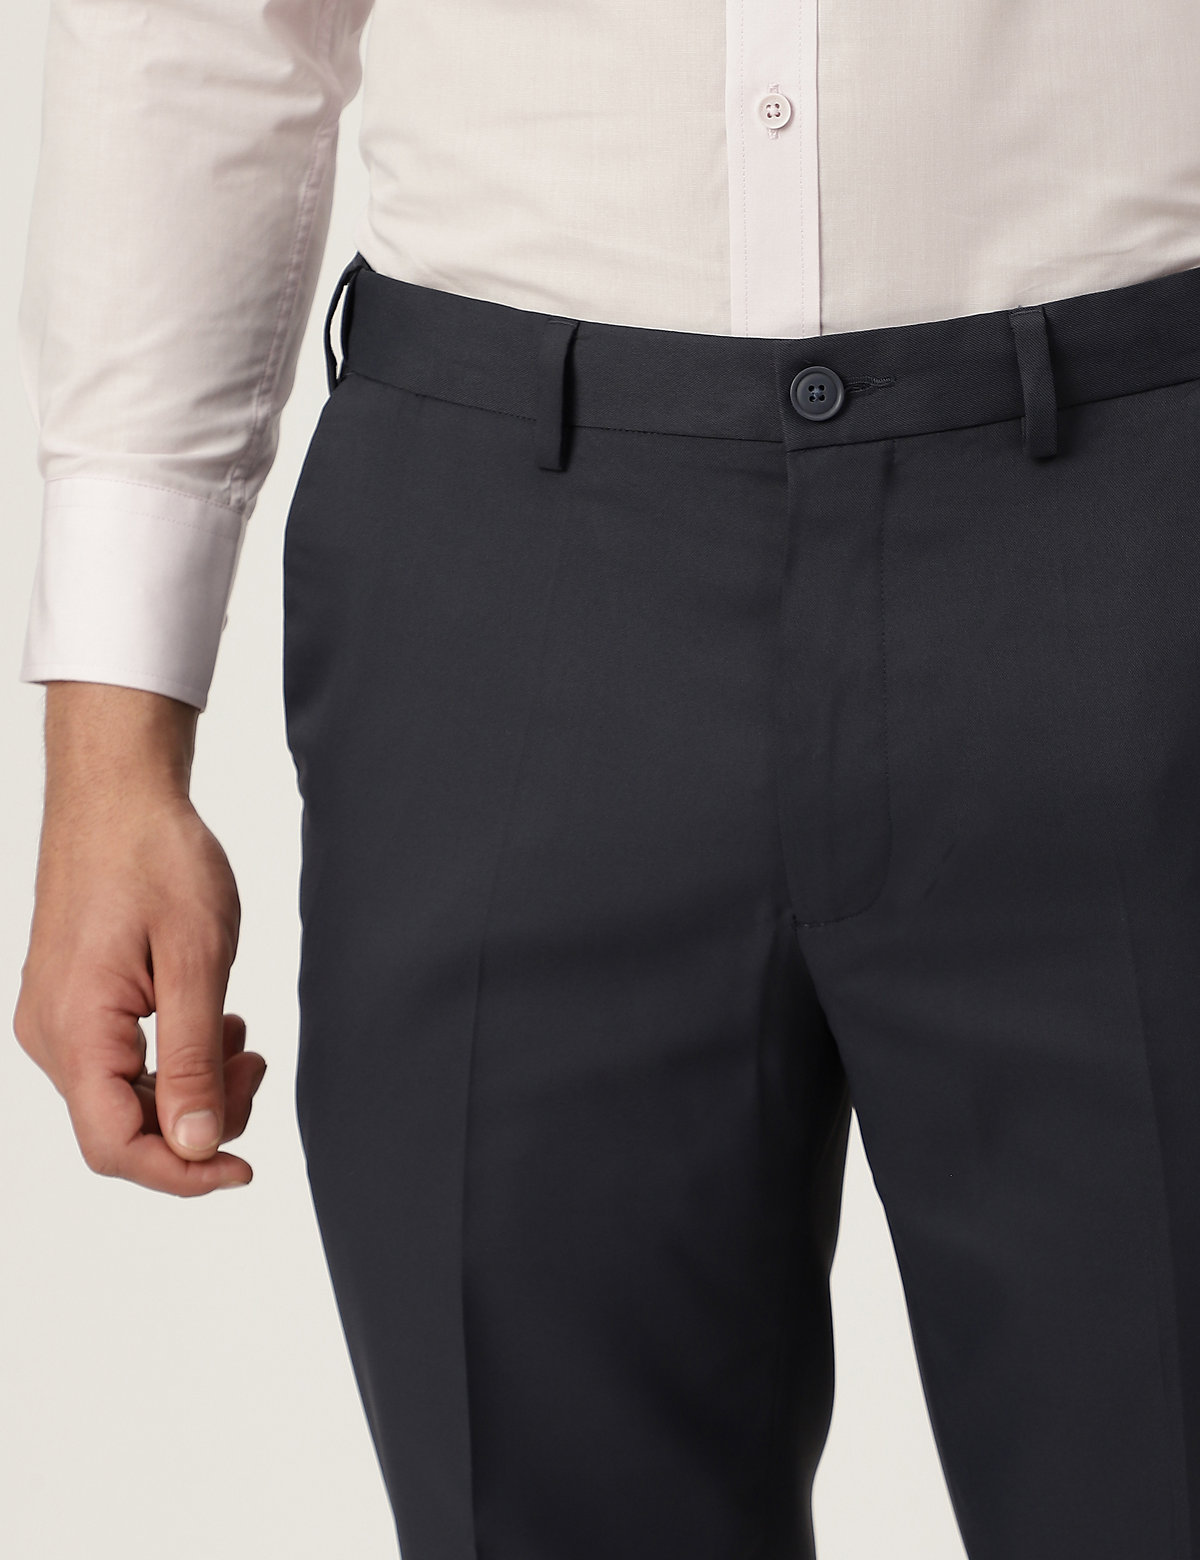 Regular Fit Crease Resistant Trousers